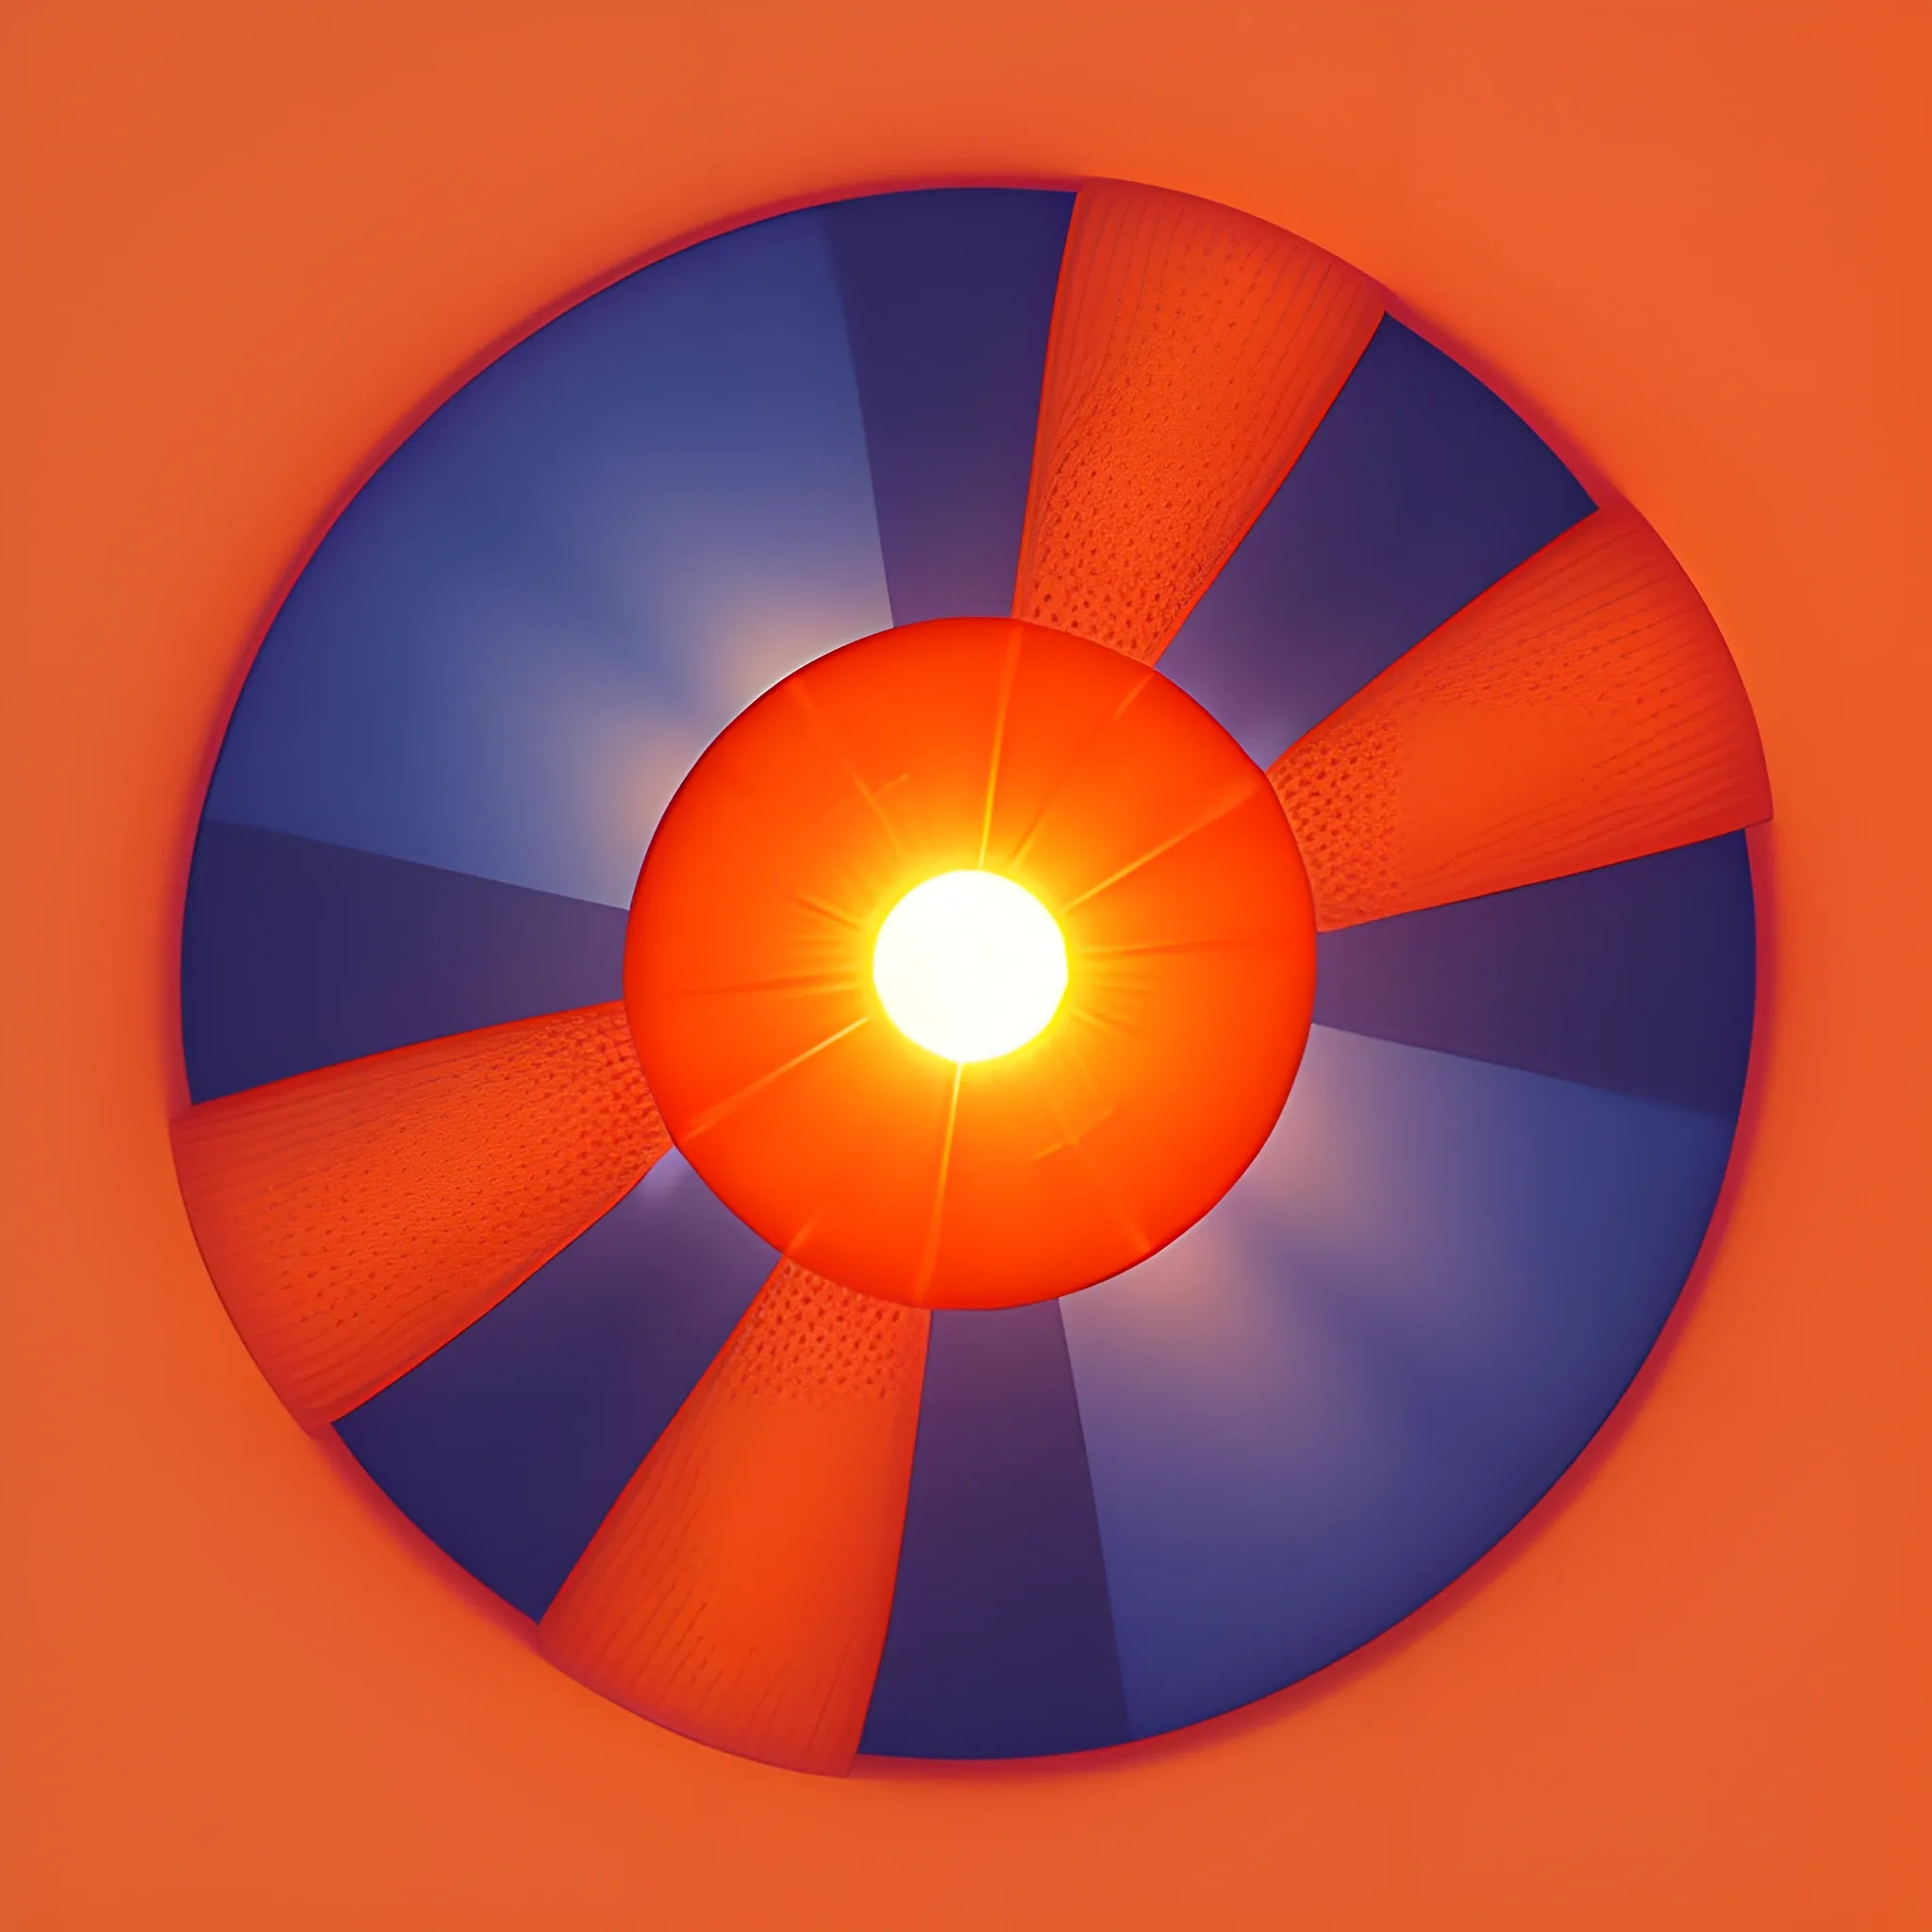 Orange SUN circular 3D rotating GIF photo